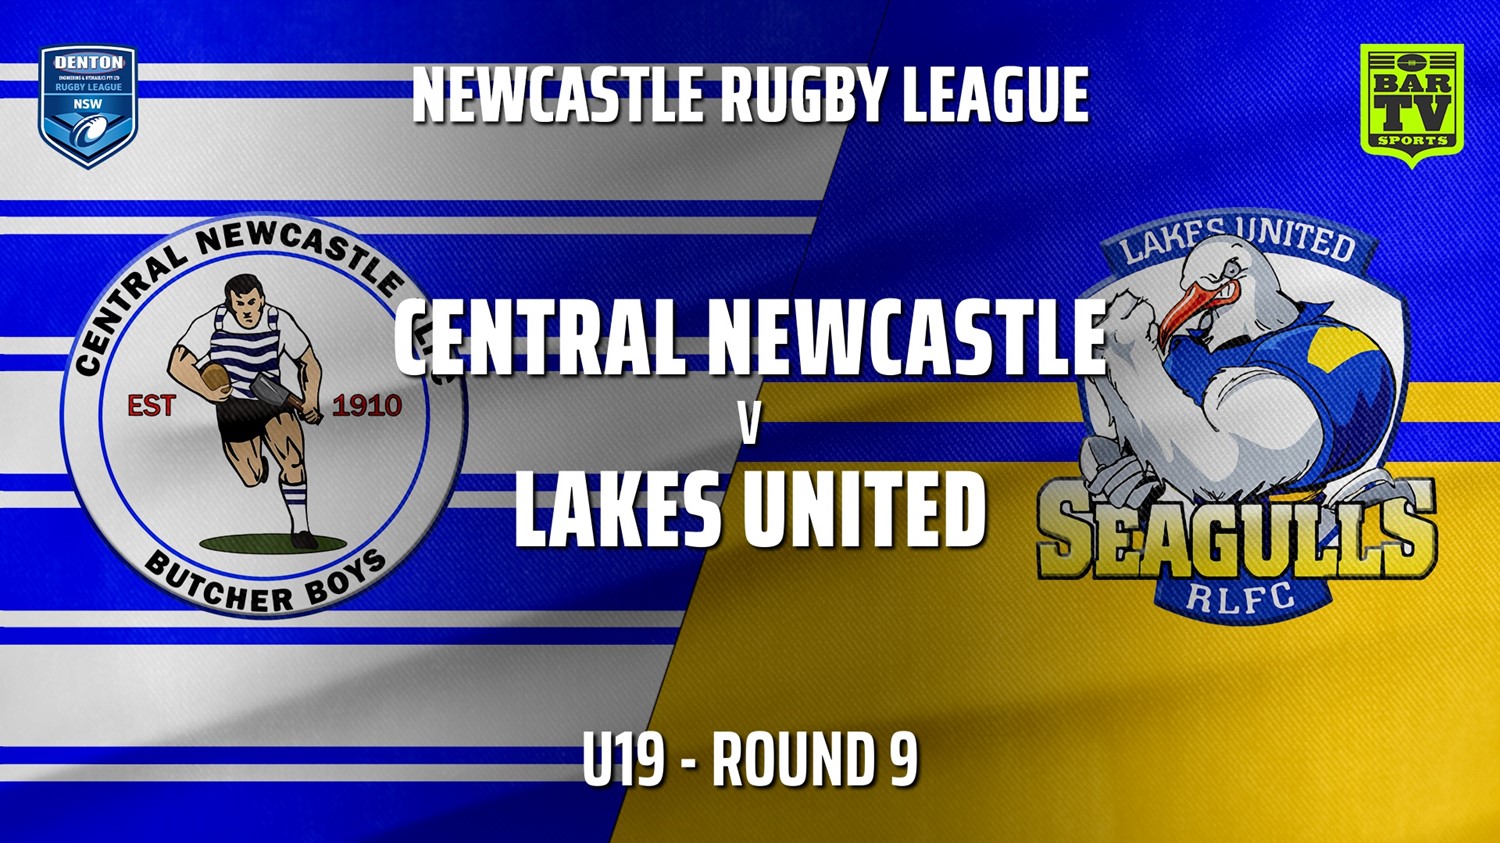 210523-Newcastle Rugby League Round 9 - U19 - Central Newcastle v Lakes United Slate Image